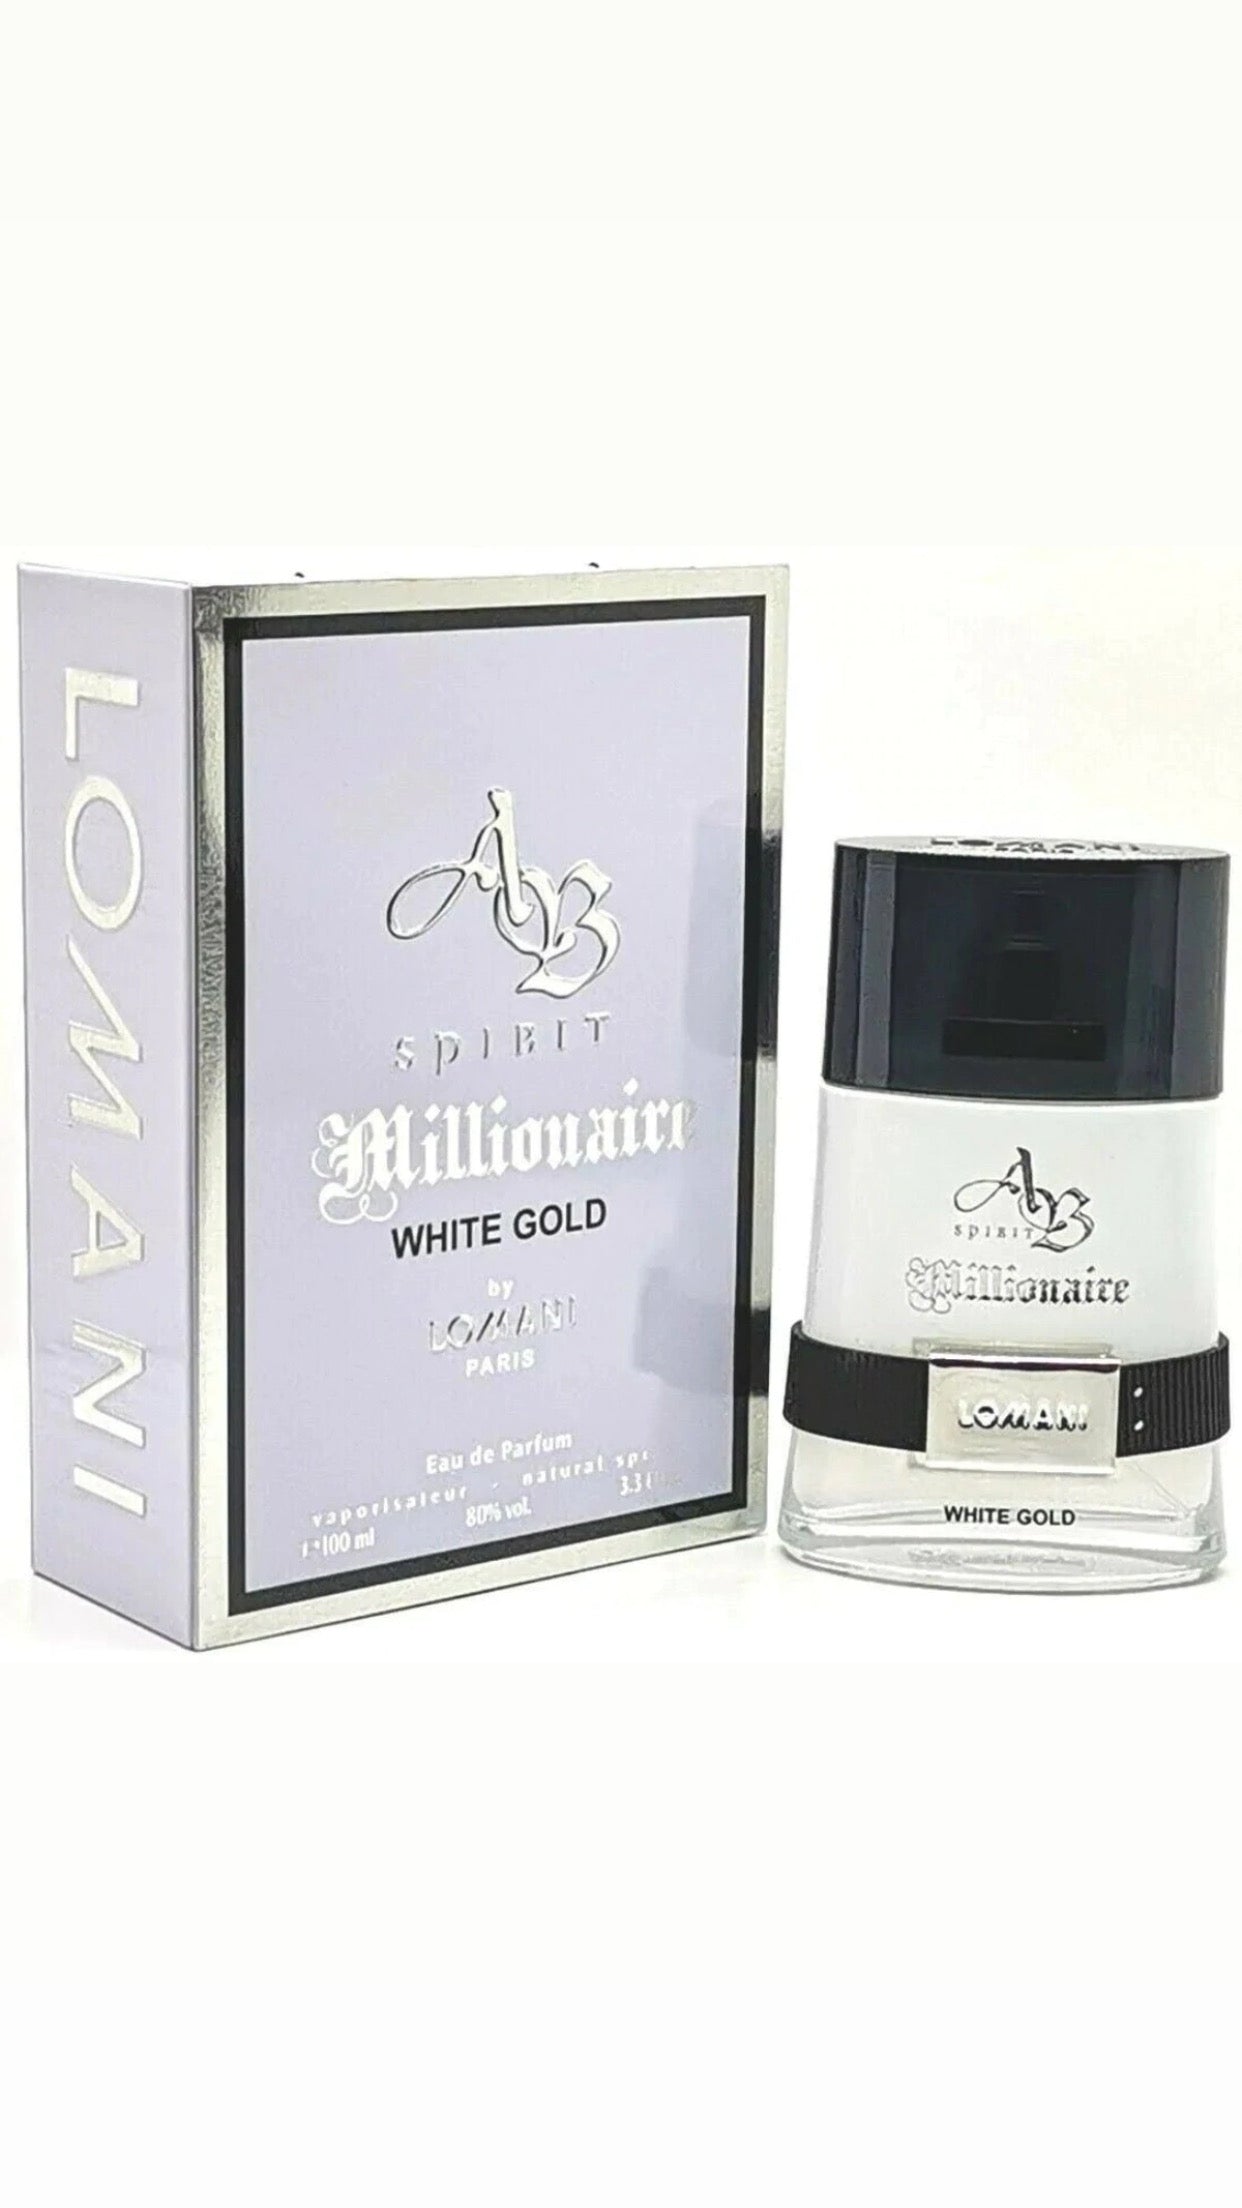 AB SPIRIT MILLIONAIRE (White Gold)